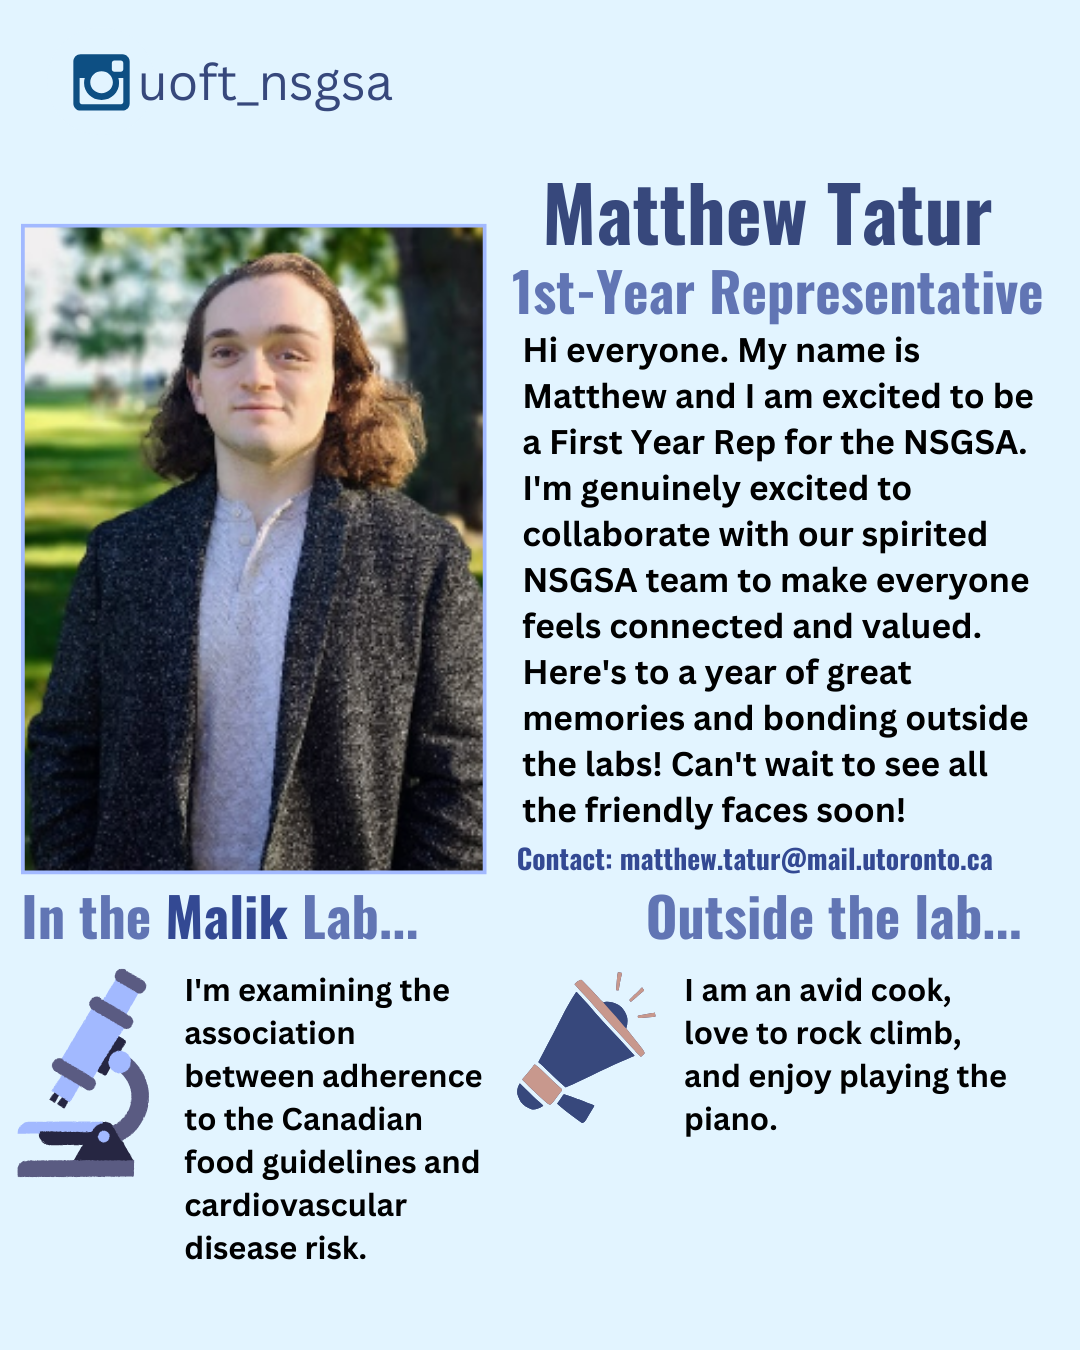 Matthew Tatur, 1st Year Representative